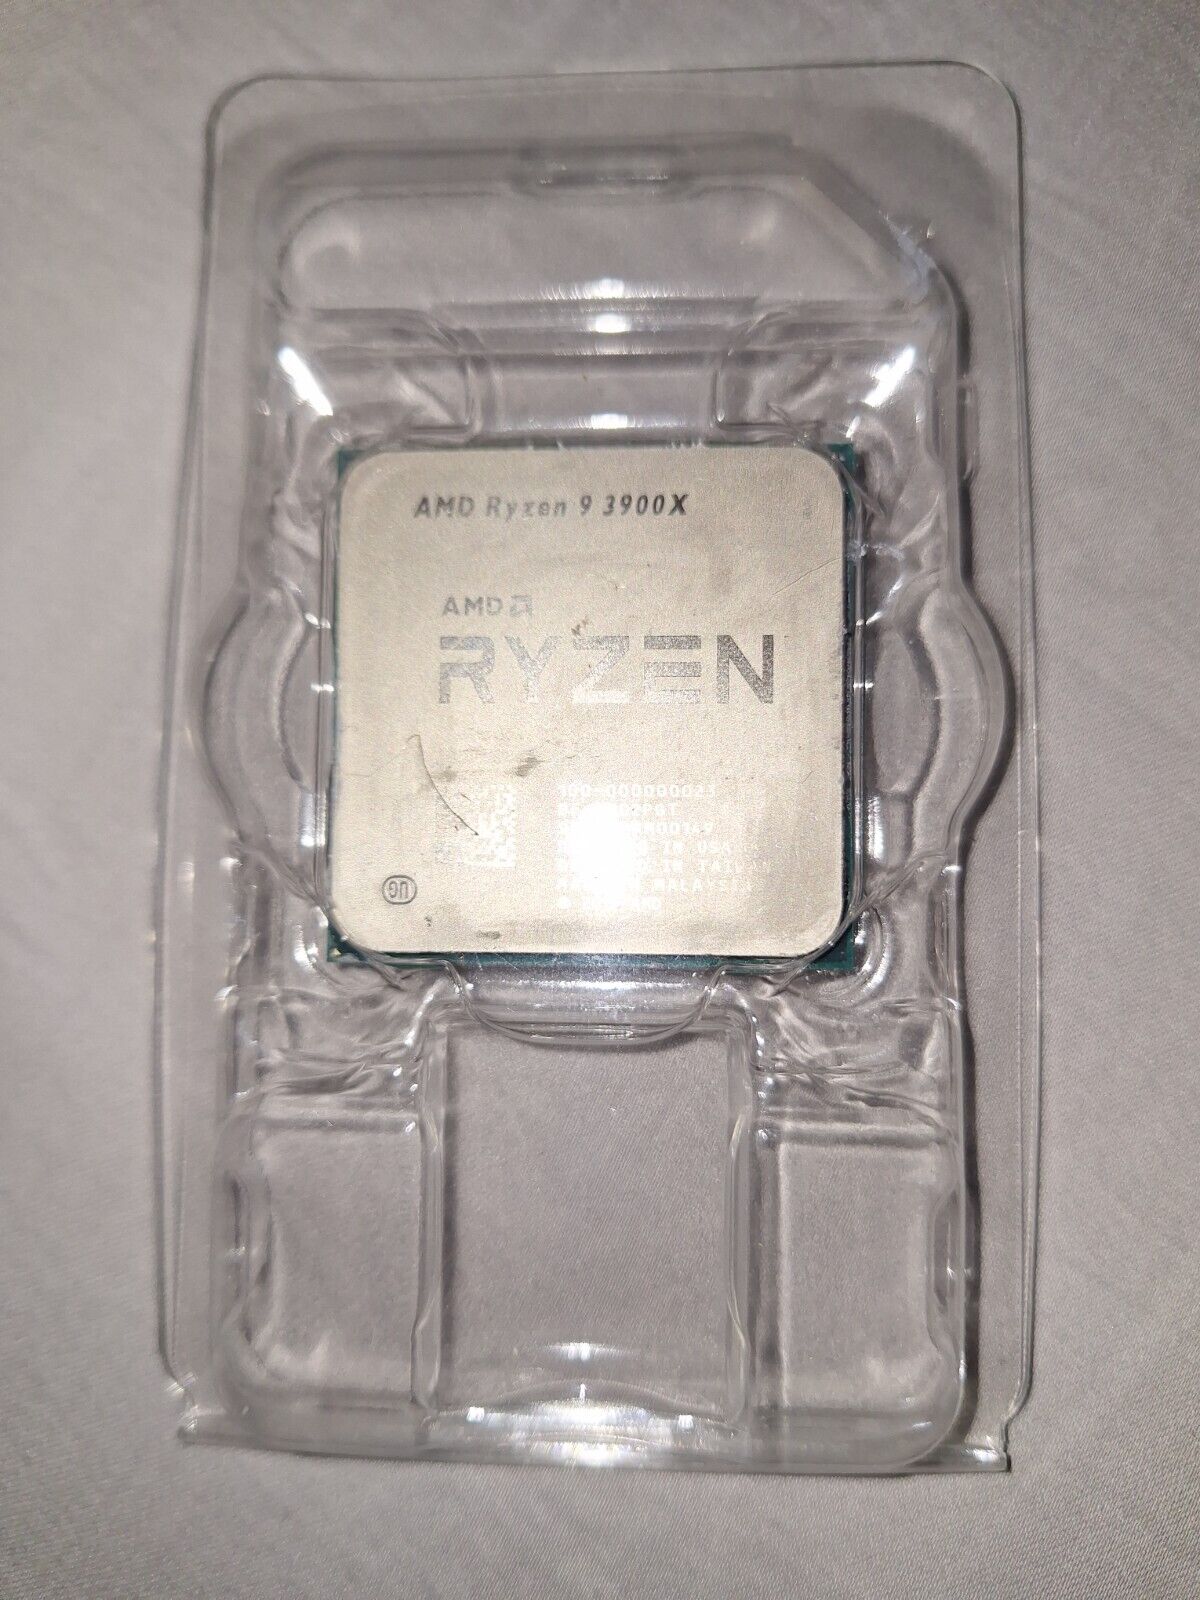 AMD Ryzen 9 3900X Processor (3.8 GHz, 12-Cores, Socket AM4)